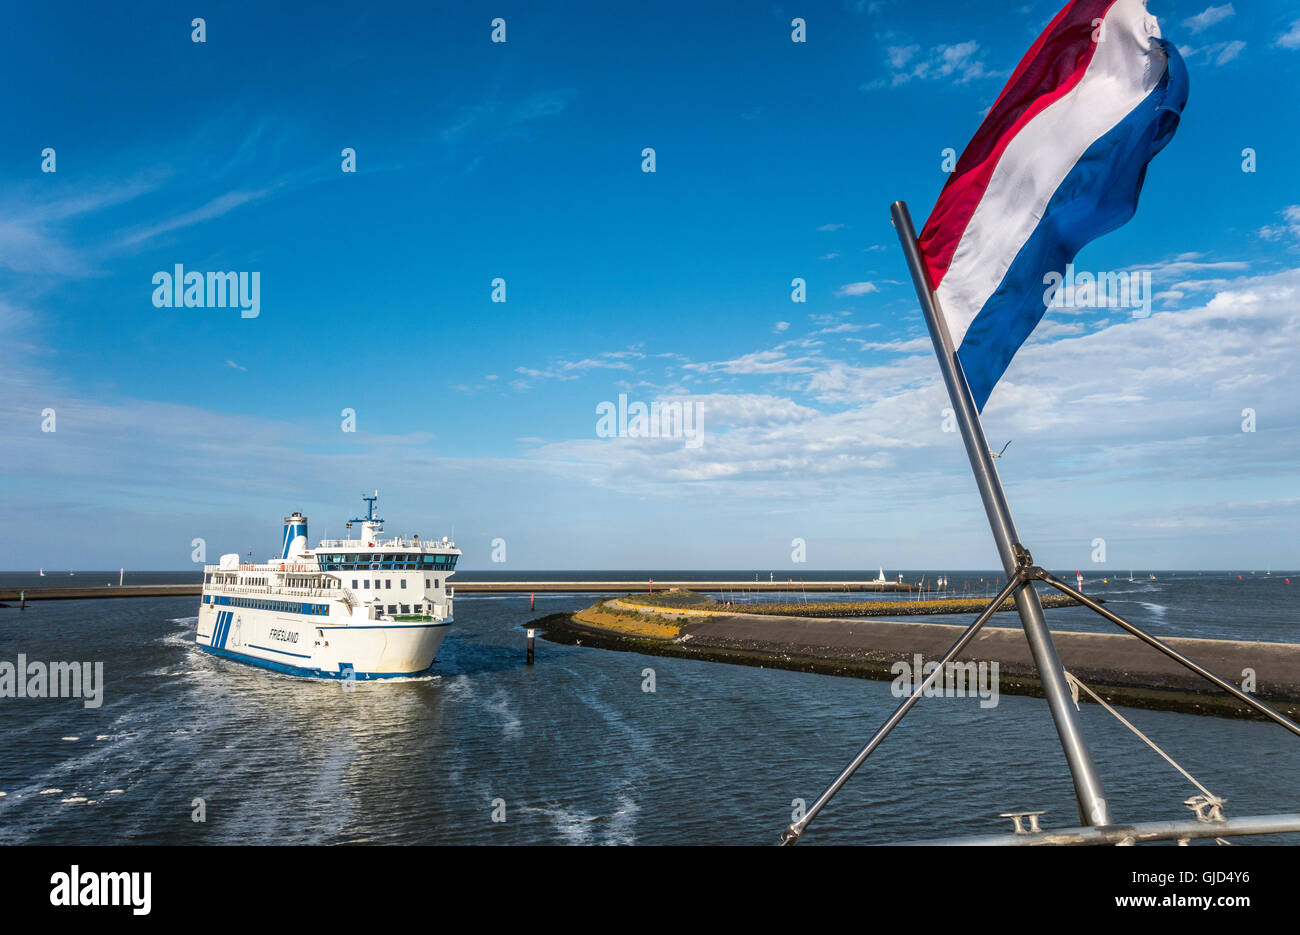 Ferry from Vlieland and Terschelling Wadden Islands arriving in Harlingen Friesland province of Friesland Netherlands Stock Photo